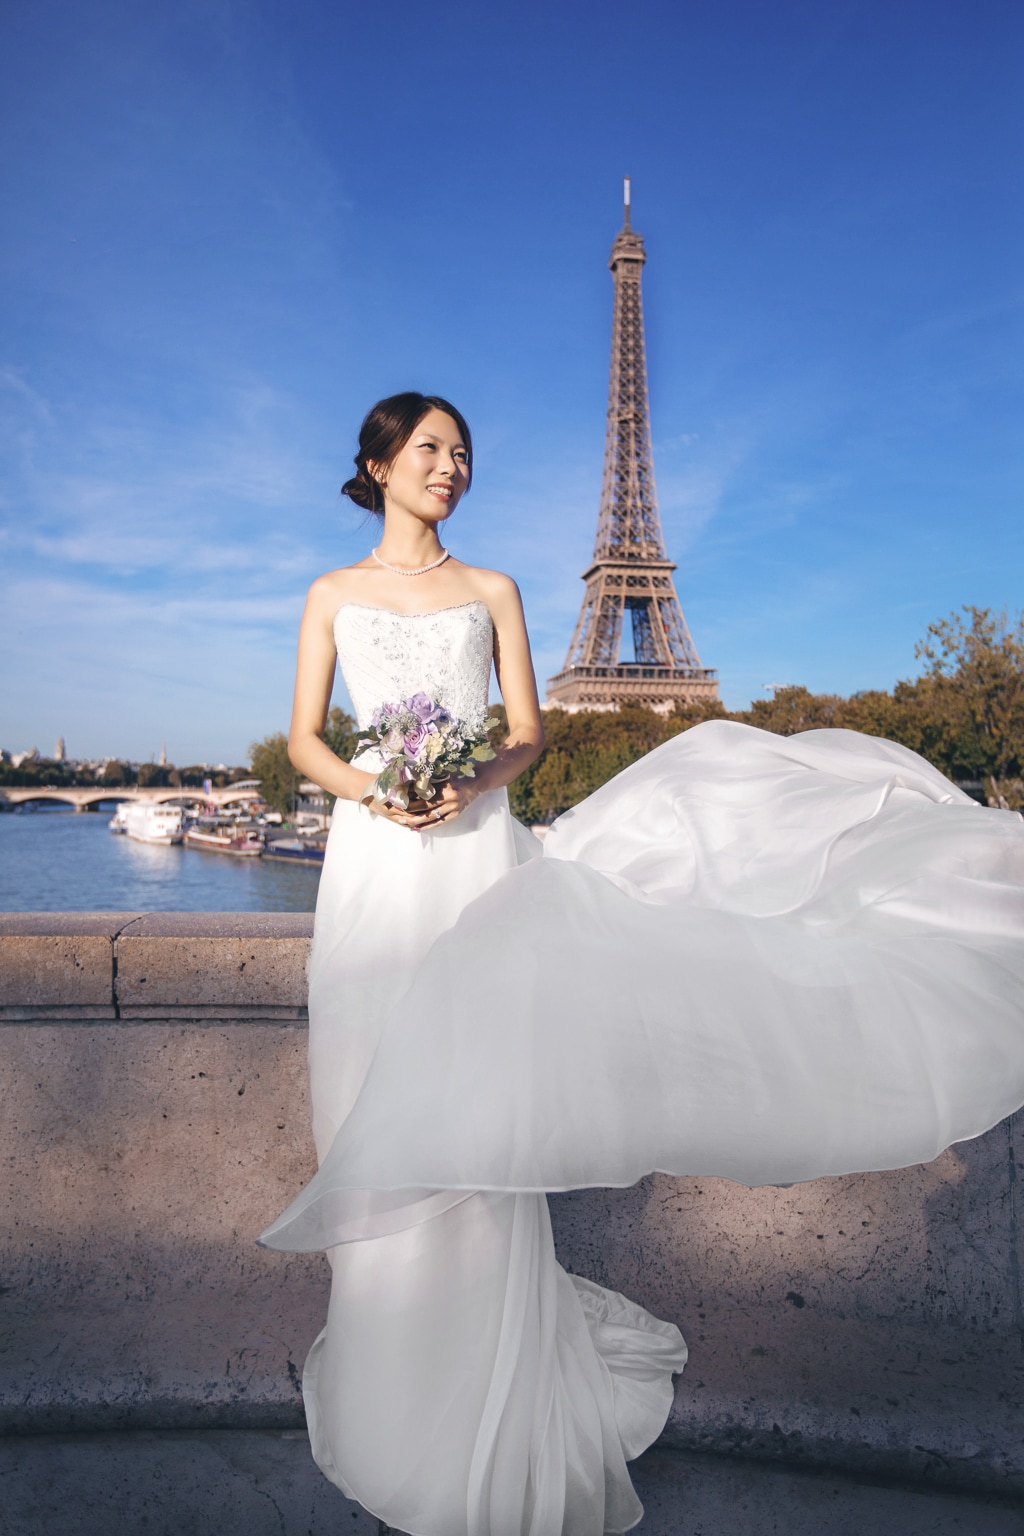 Night Shoot in Paris - Wedding Shoot at Louvre Museum, Bir Hakeim, Eiffel Tower by Yao on OneThreeOneFour 2